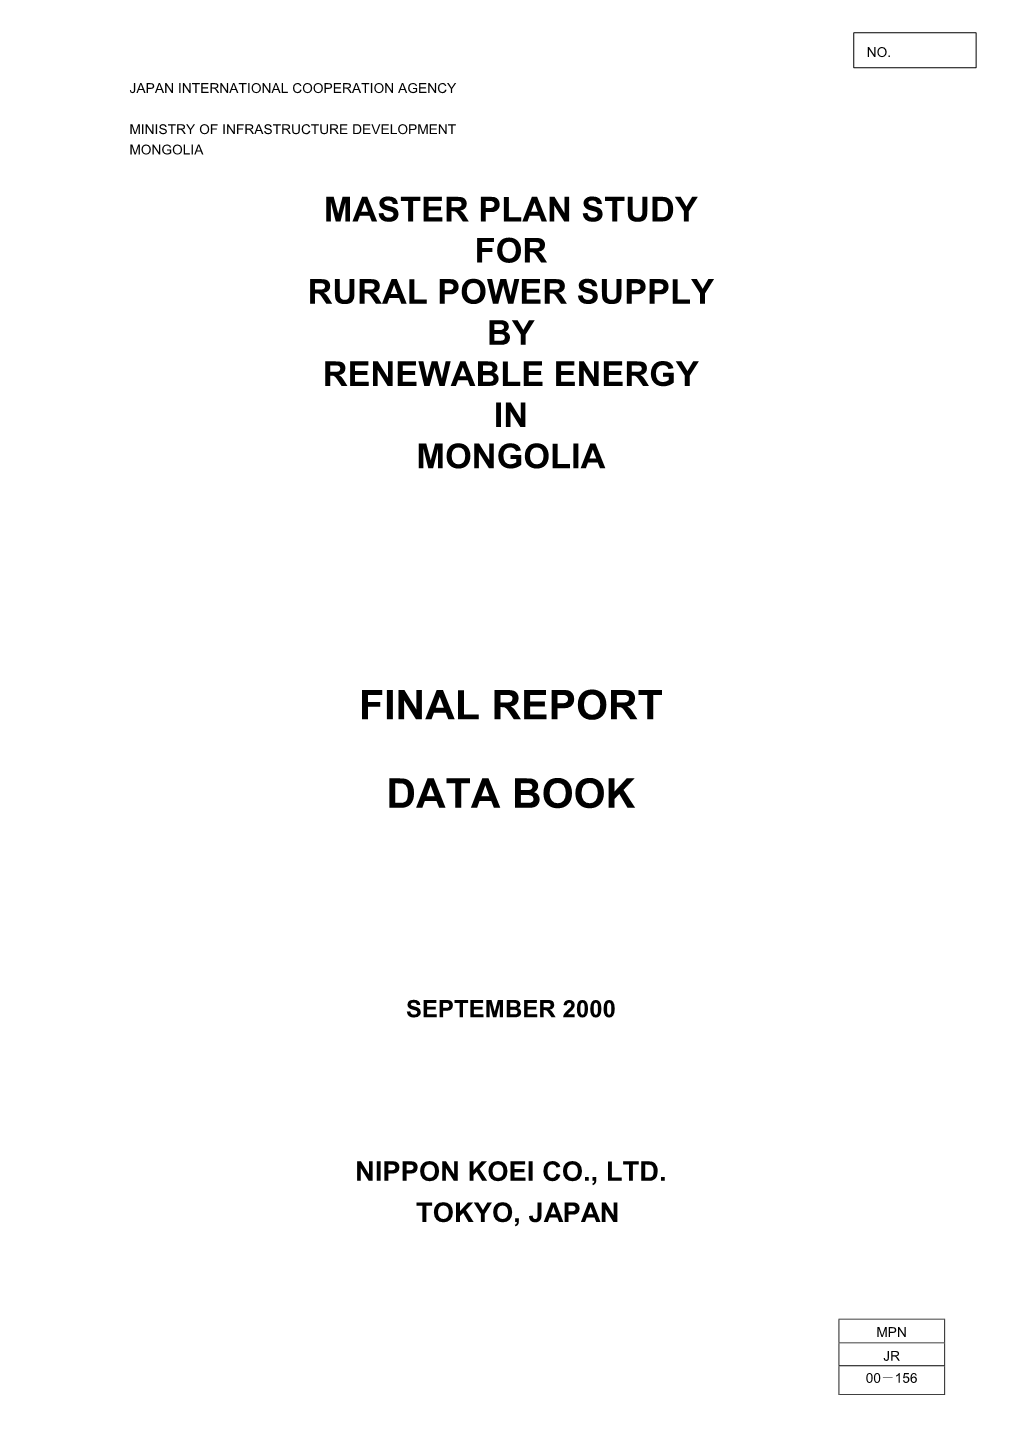 Final Report Data Book